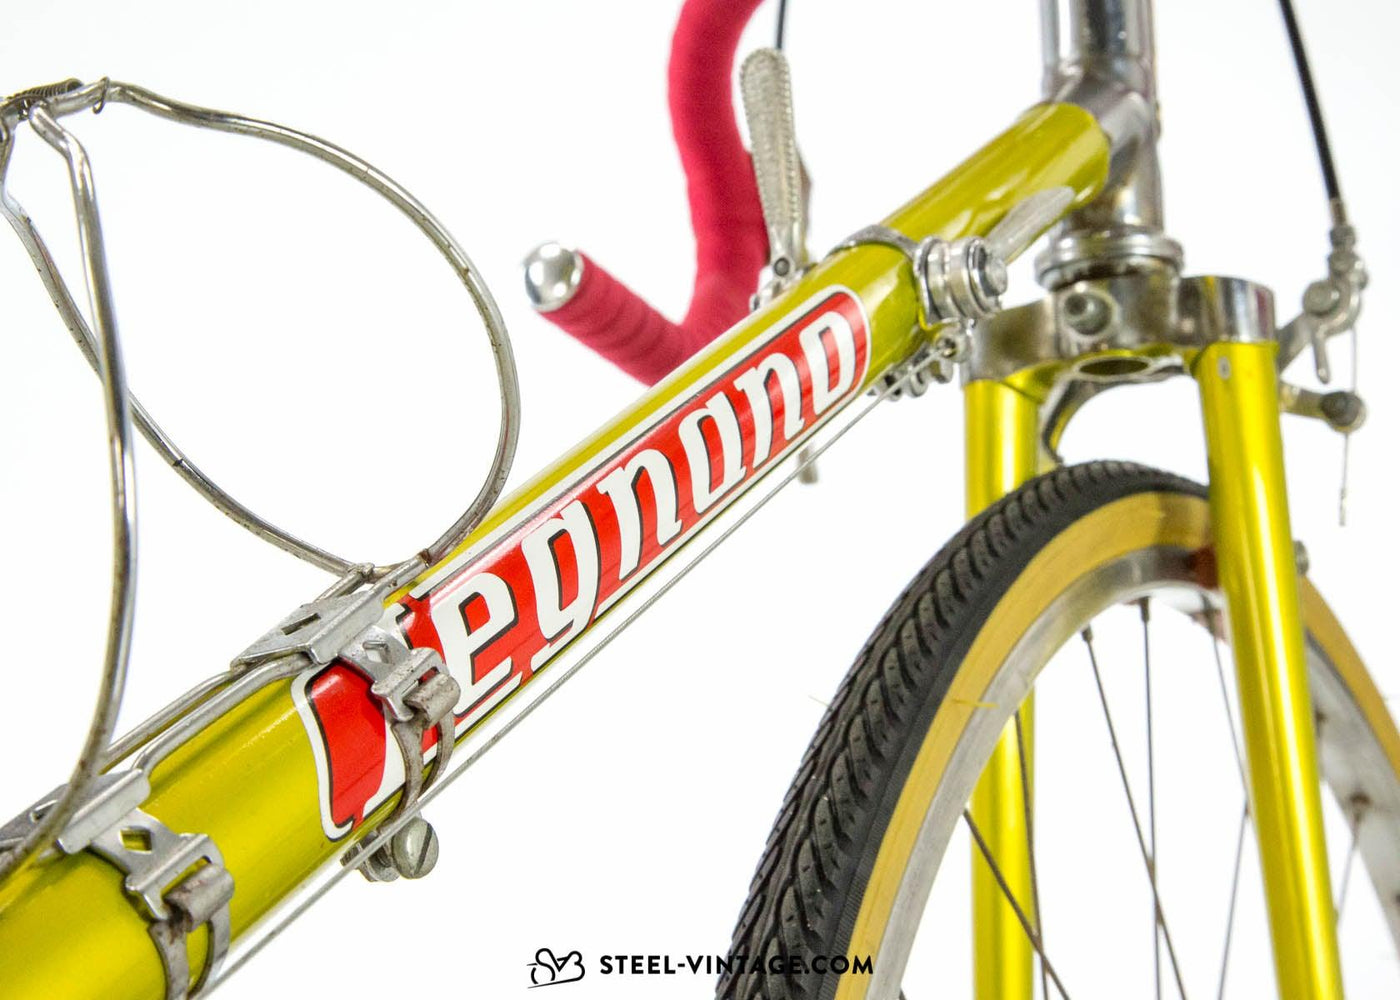 Legnano Classic Road Bicycle 1960s - Steel Vintage Bikes